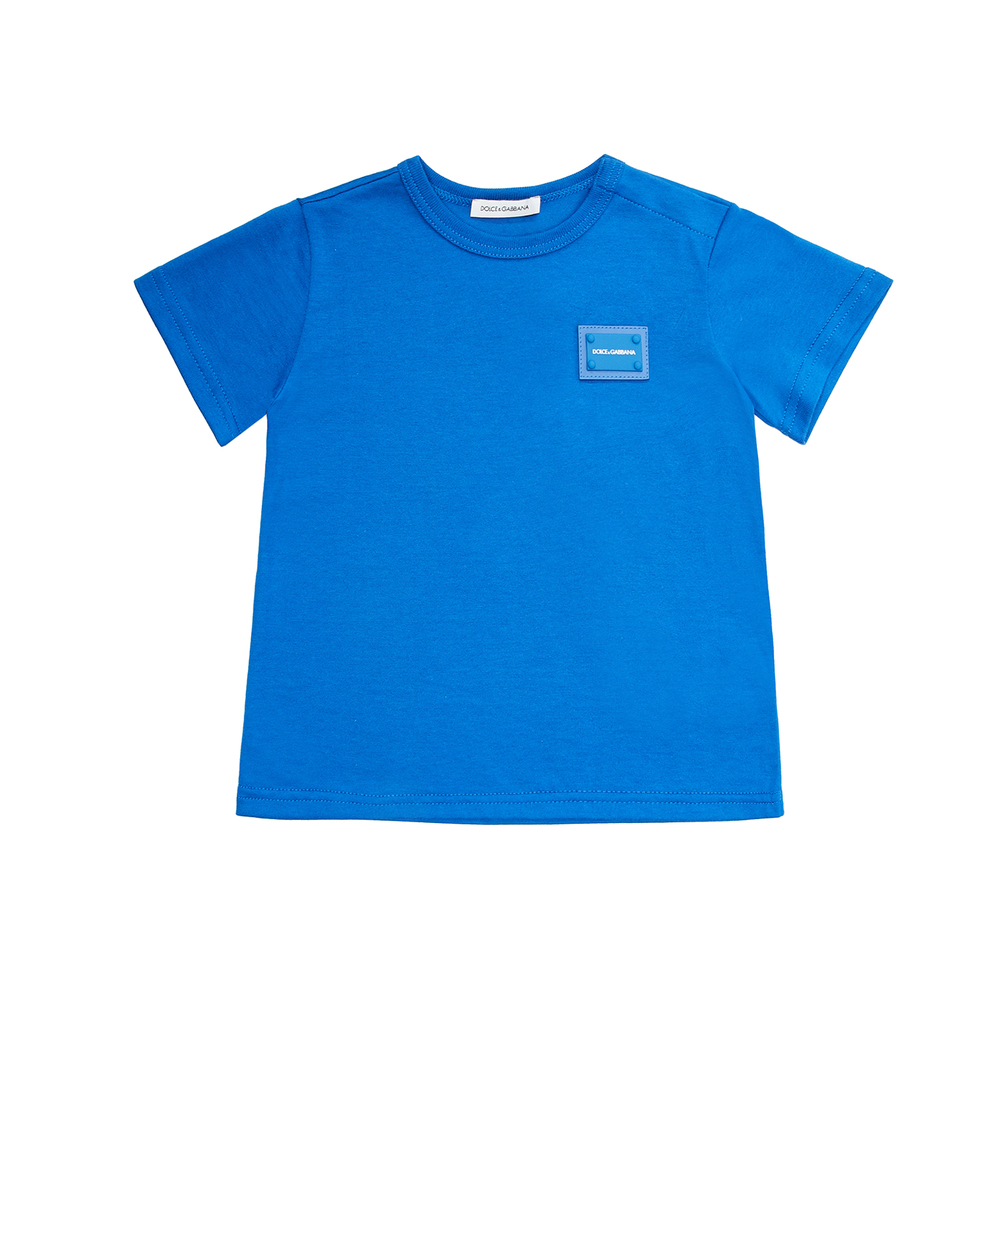 Футболка Dolce&Gabbana Kids L1JT7T-G7OLK-, синий цвет • Купить в интернет-магазине Kameron